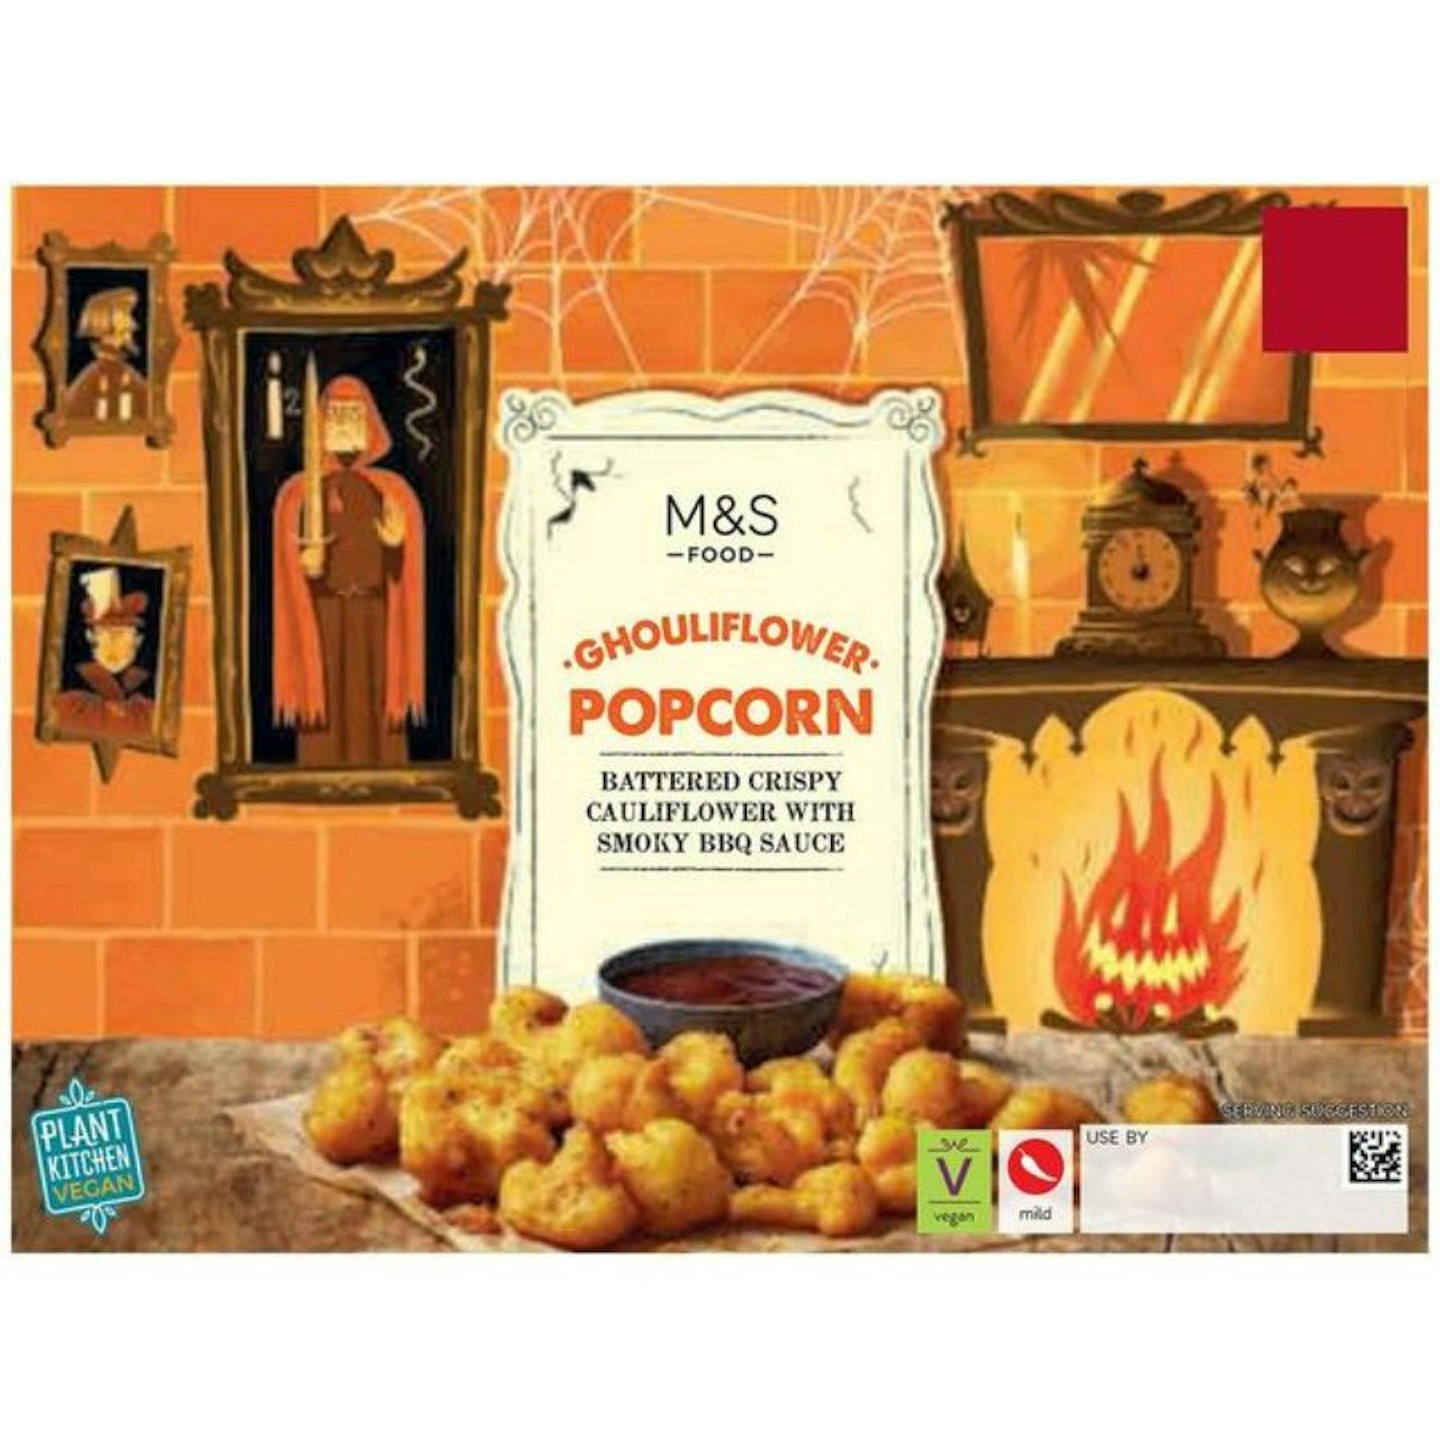 M&S Ghouliflower Popcorn